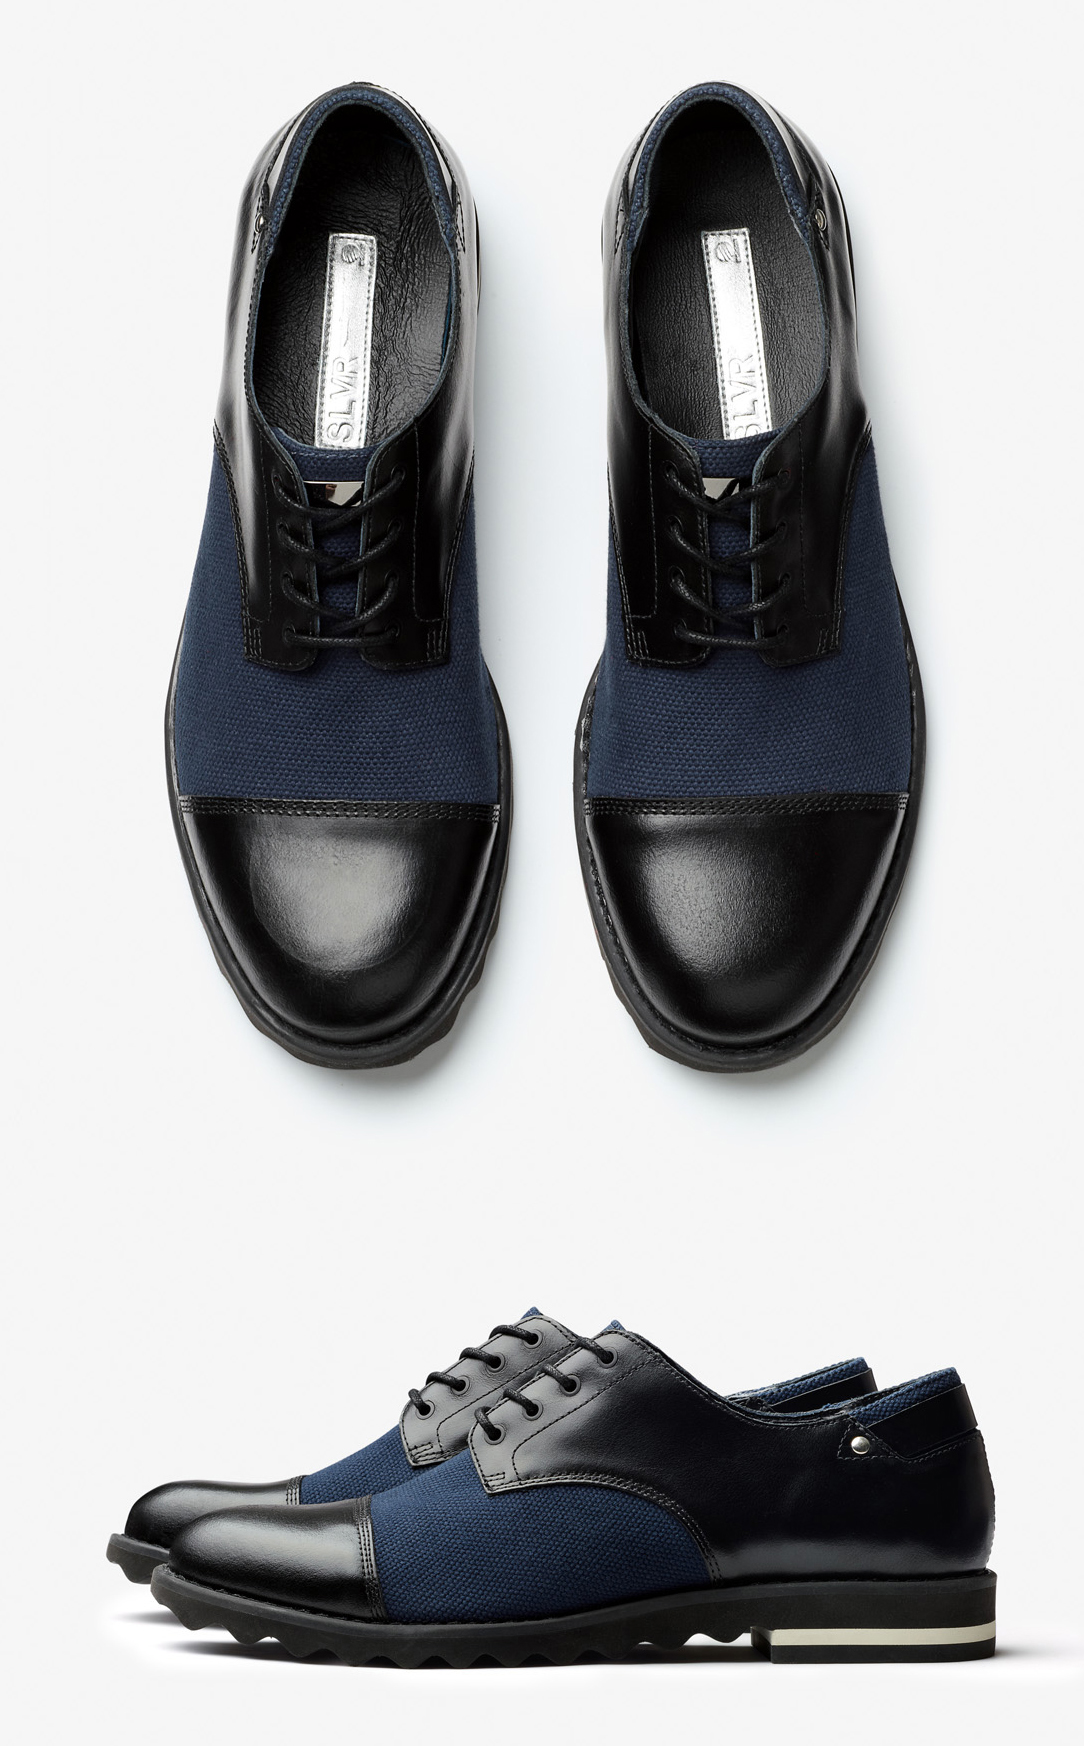 ITSMYDAY → adidas-slvr-high-end-cap-toe-shoes